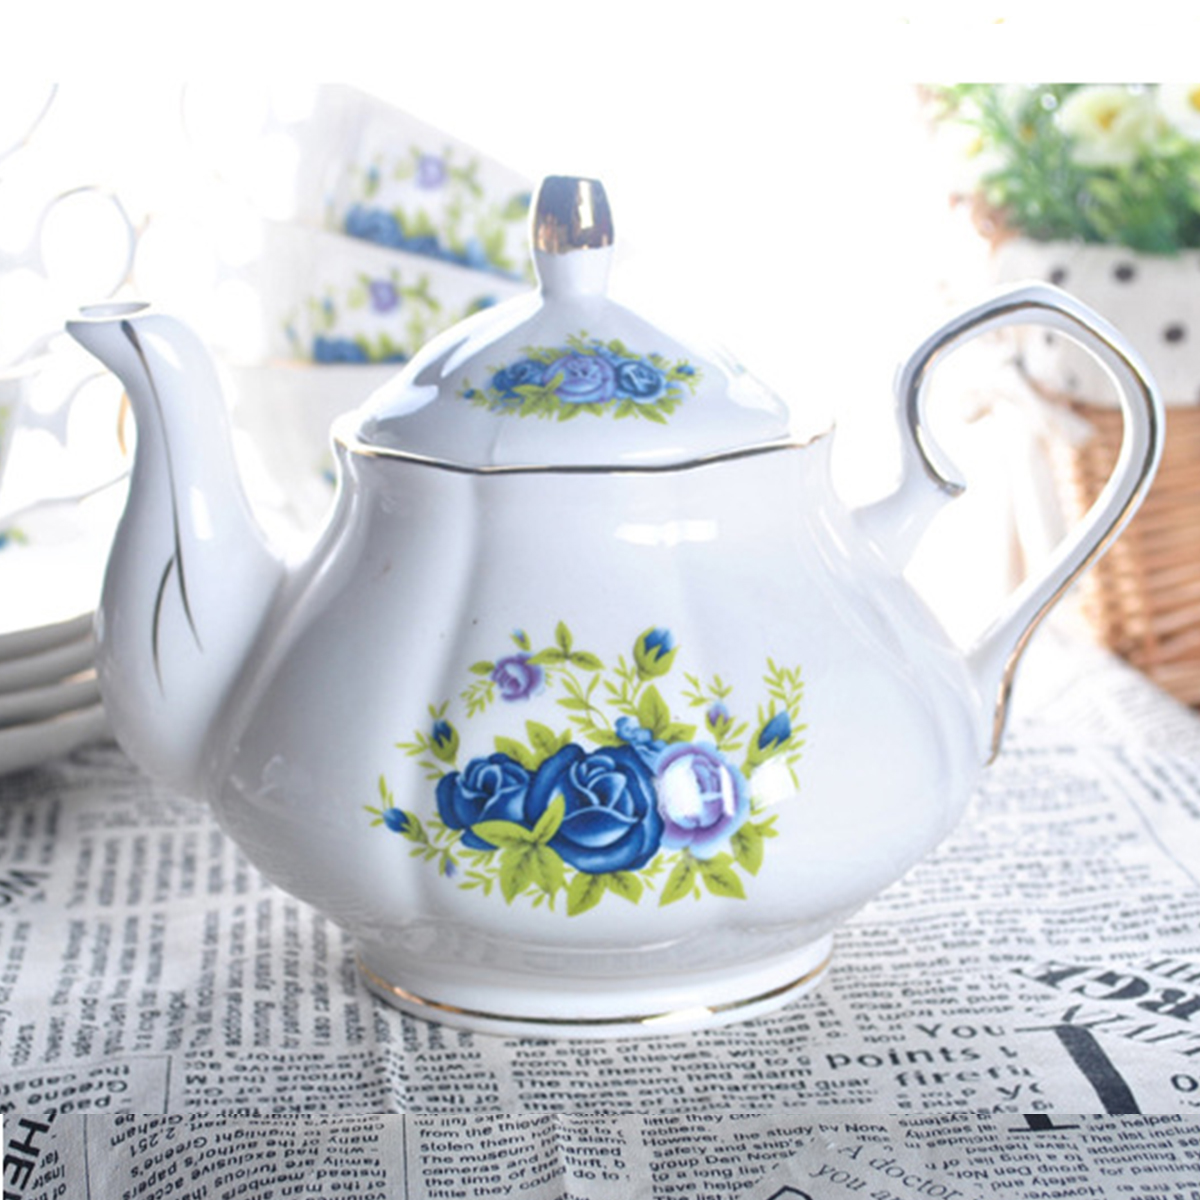 15pcs-Fine-Bone-China-Pottery-Porcelain-Elegant-Coffee-Tea-Pot-Cup-Set-Gifts-1350957